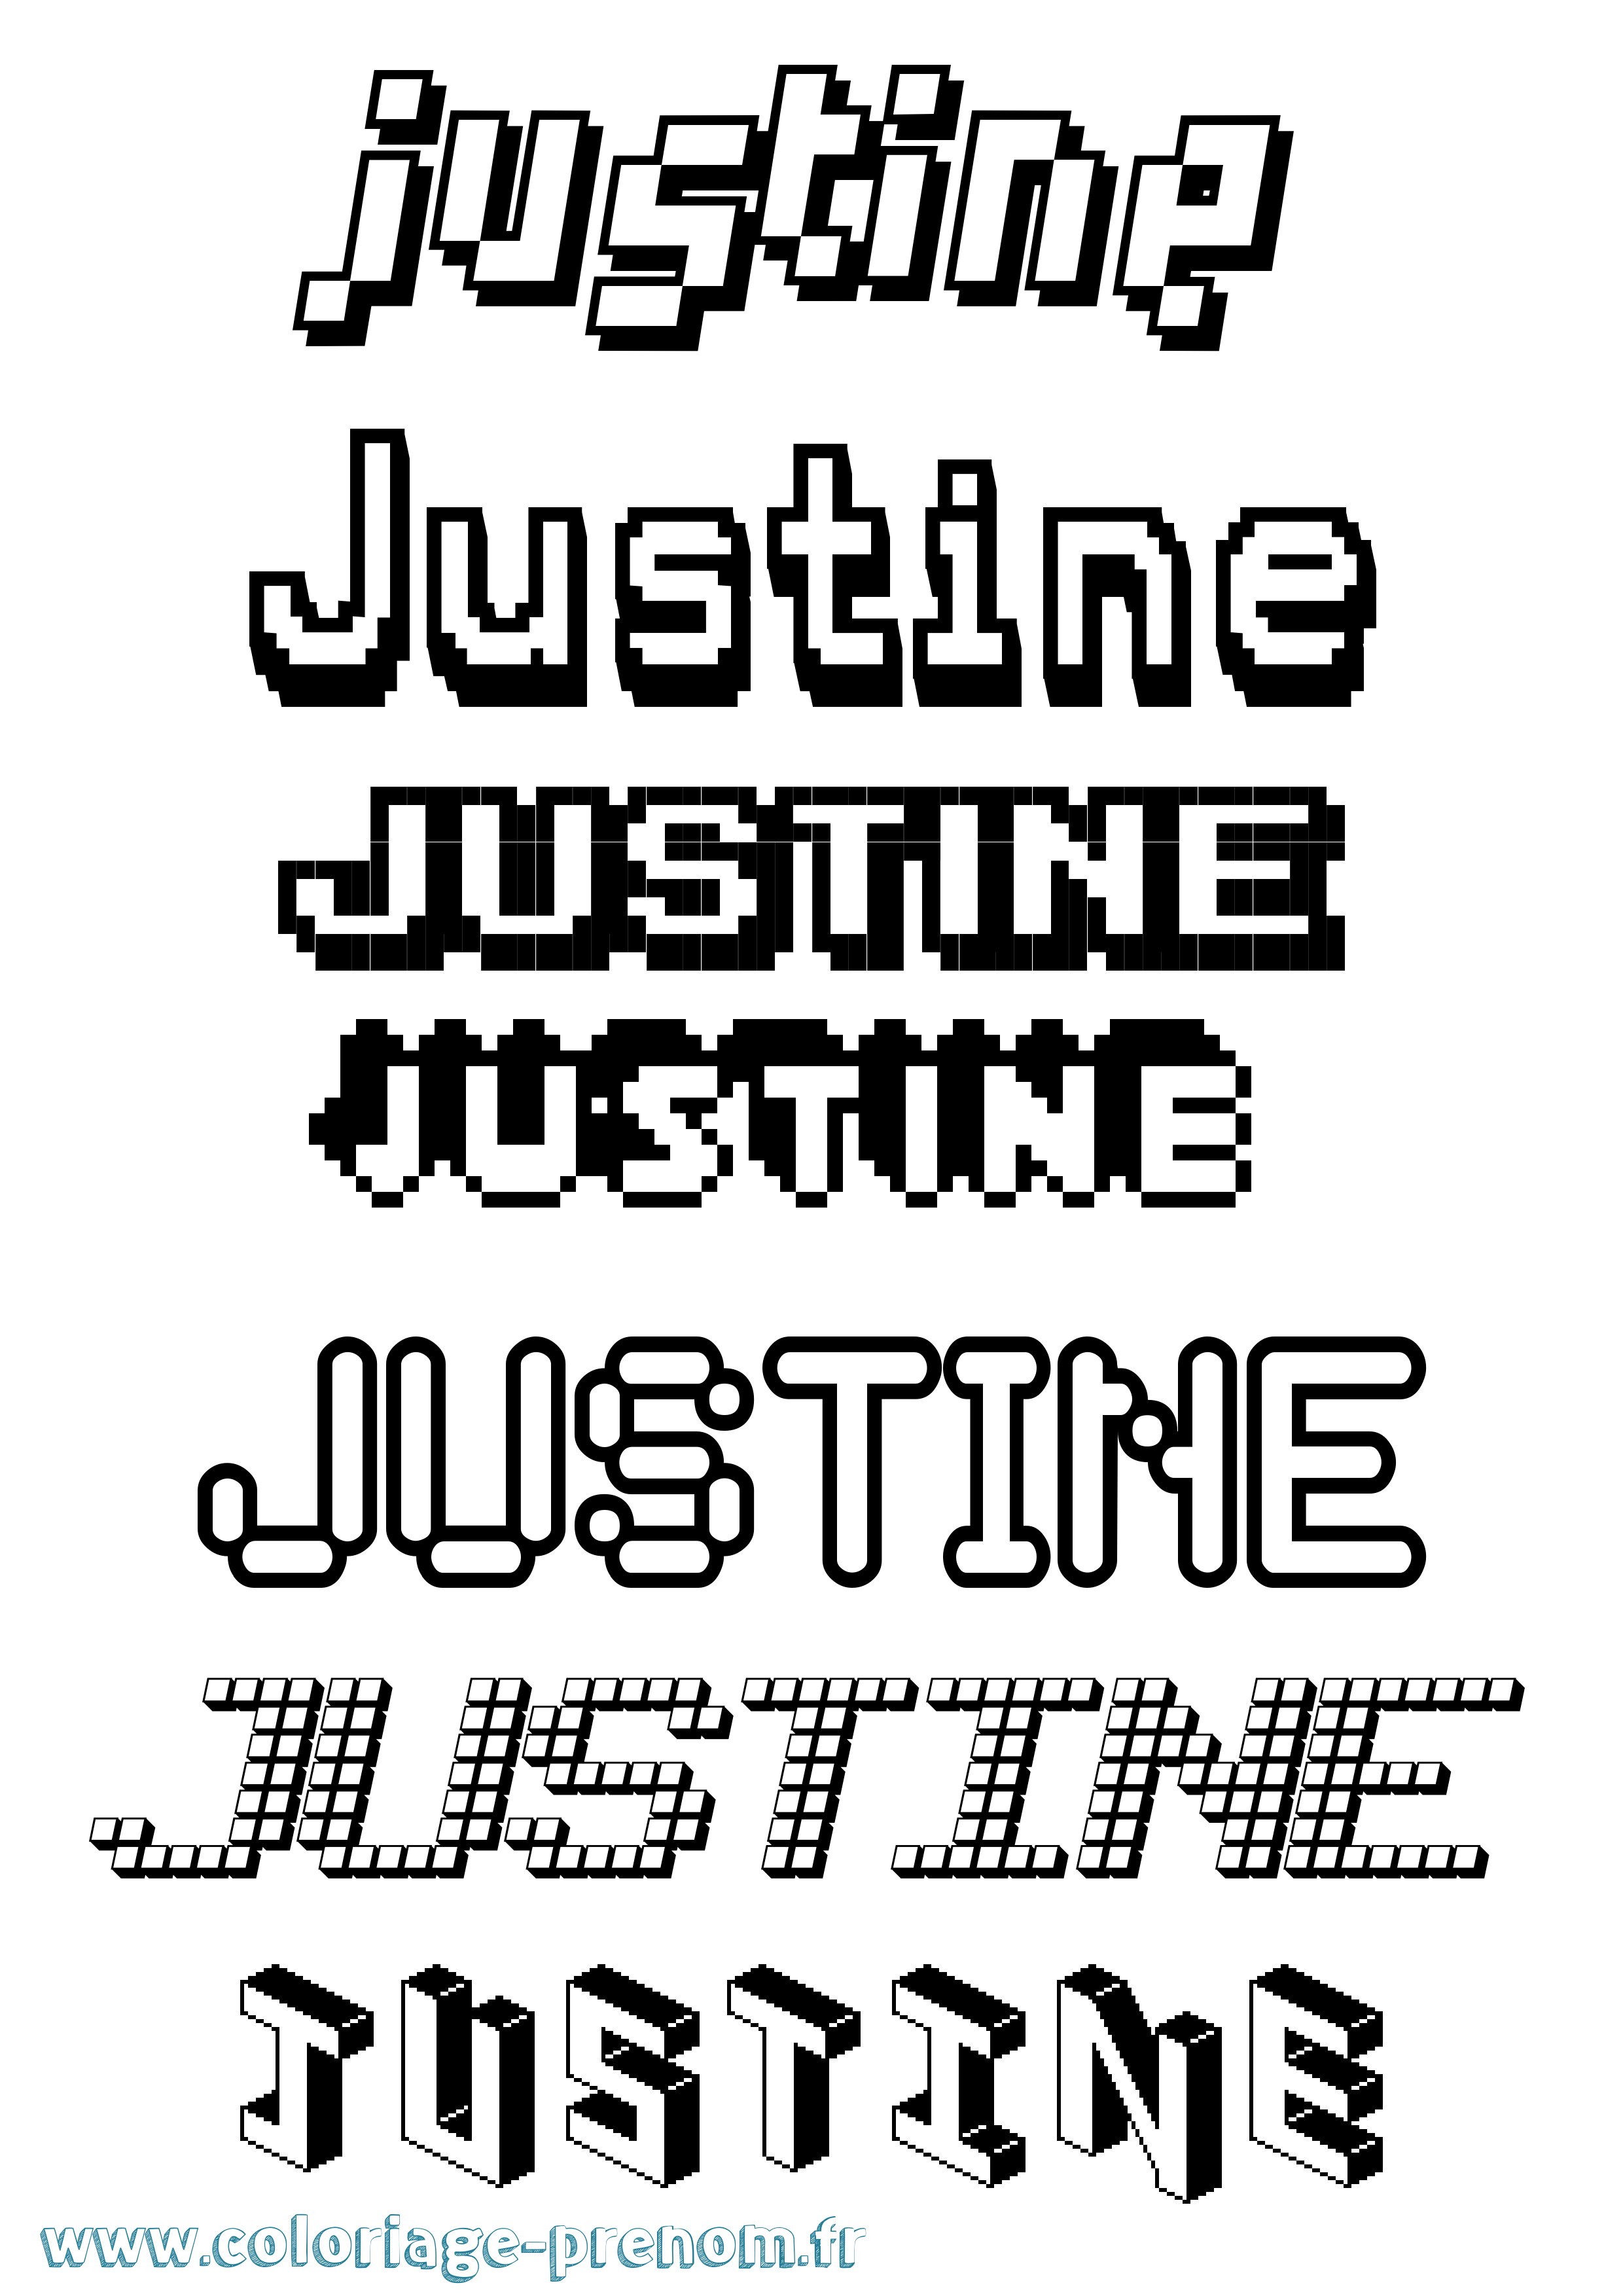 Coloriage prénom Justine Pixel